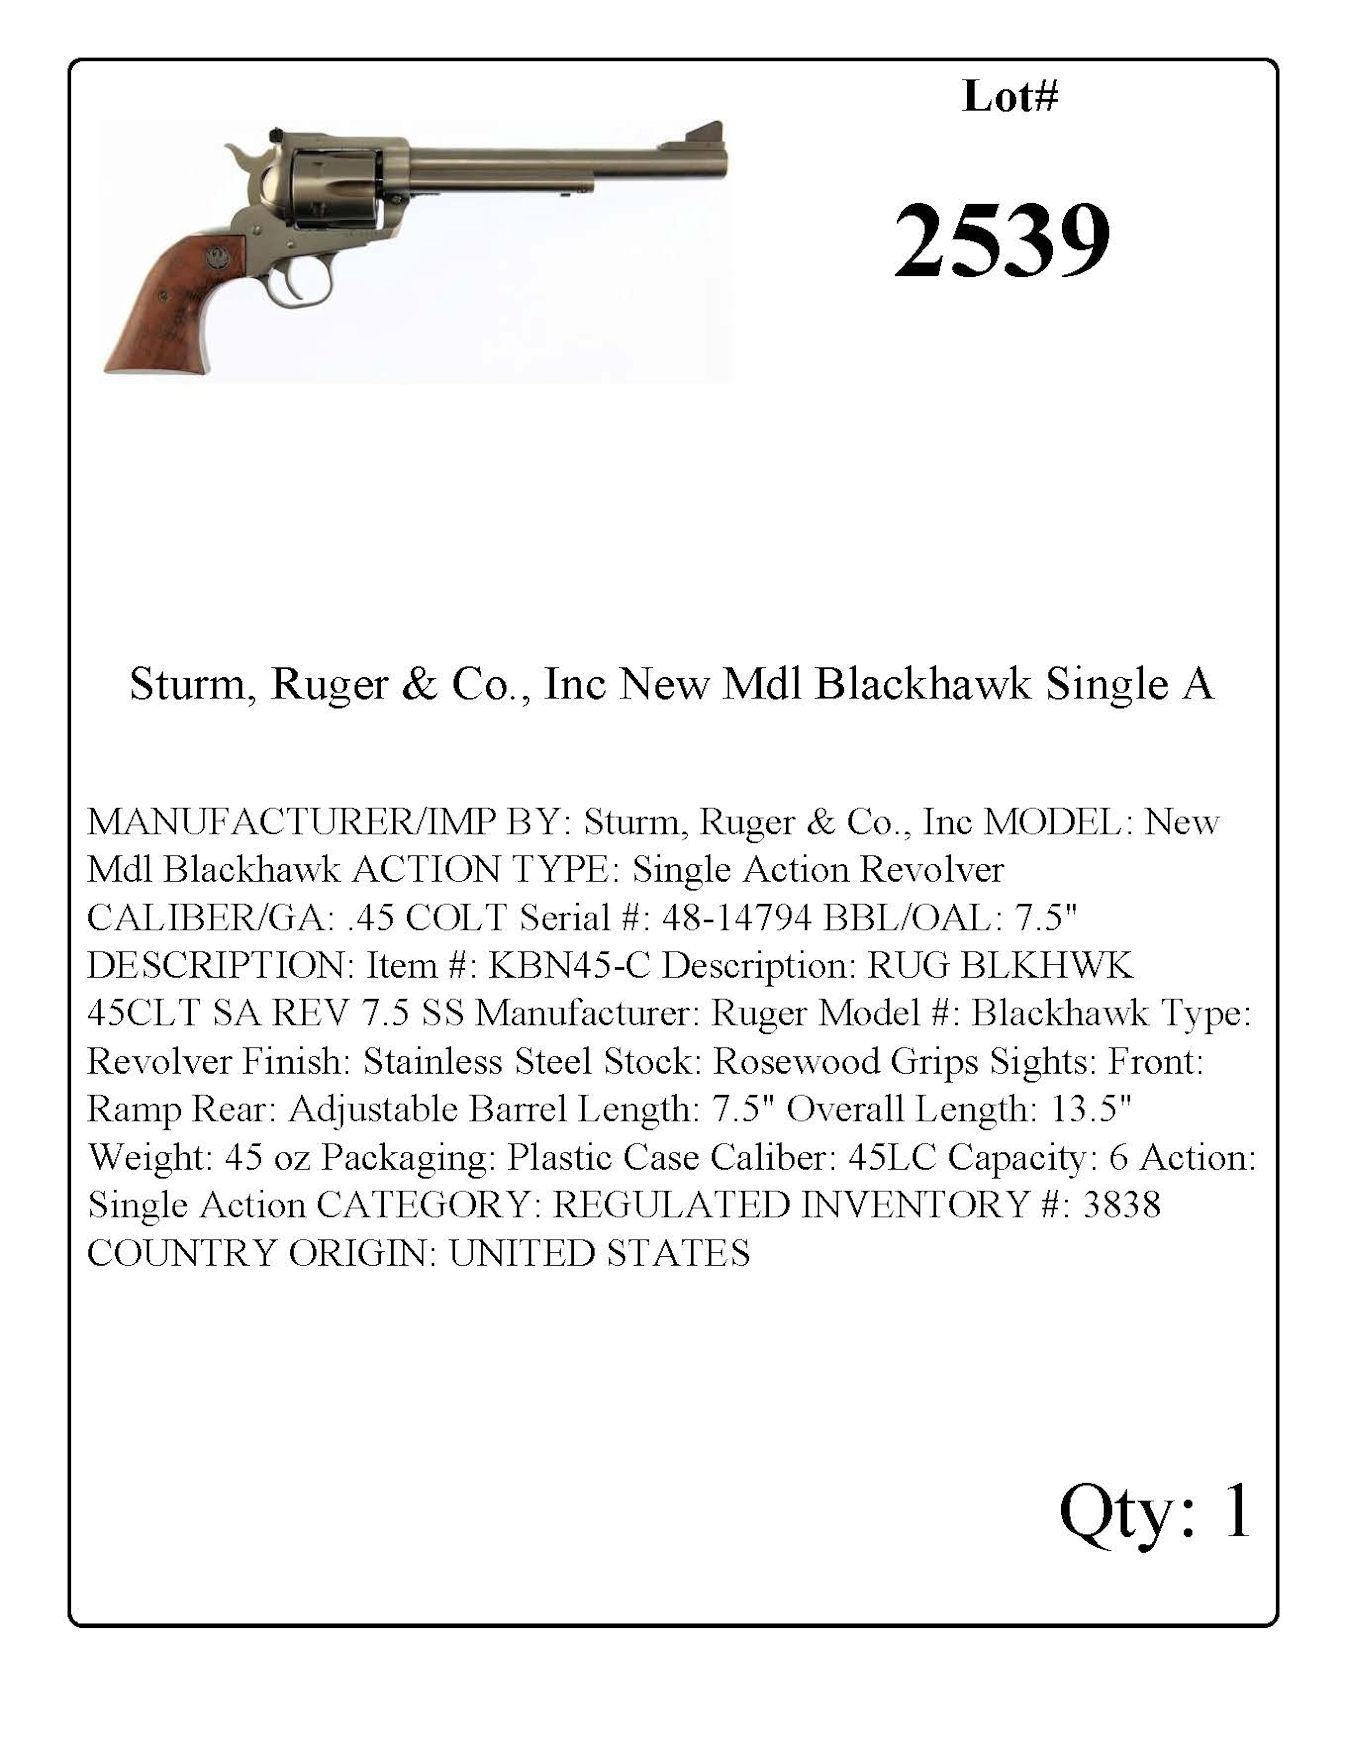 Sturm, Ruger & Co., Inc New Mdl Blackhawk Single Action Revolver